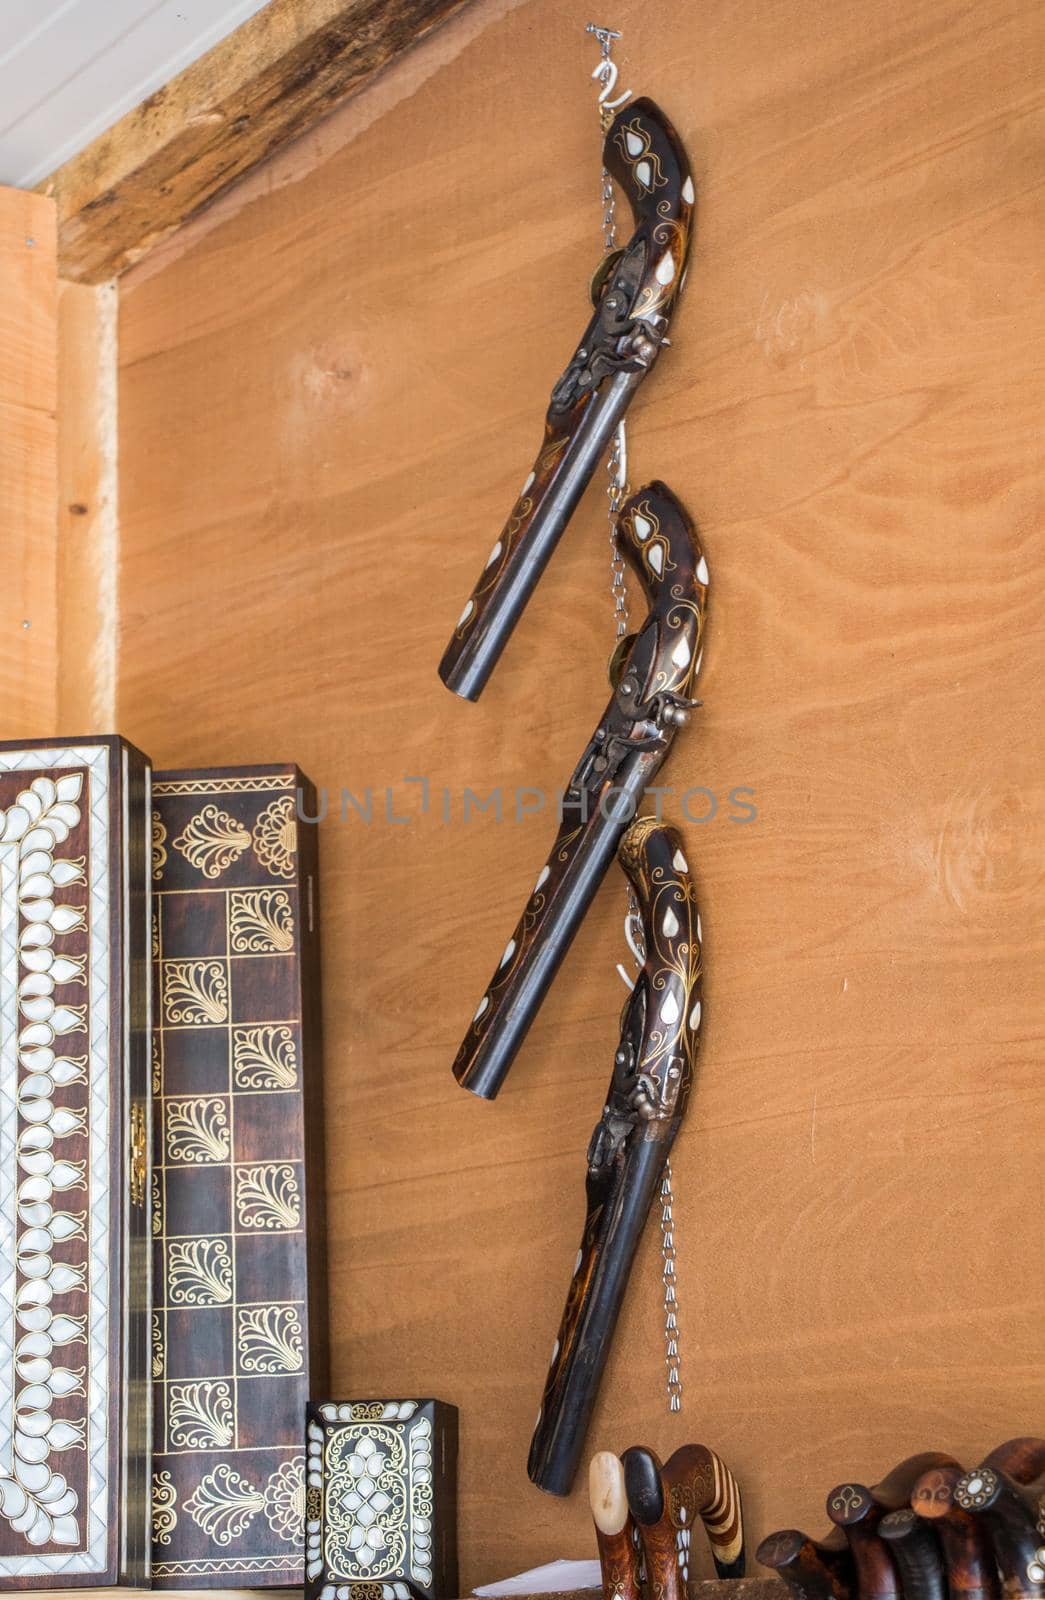 Antique stylistic revolve-like gun on wooden background by berkay